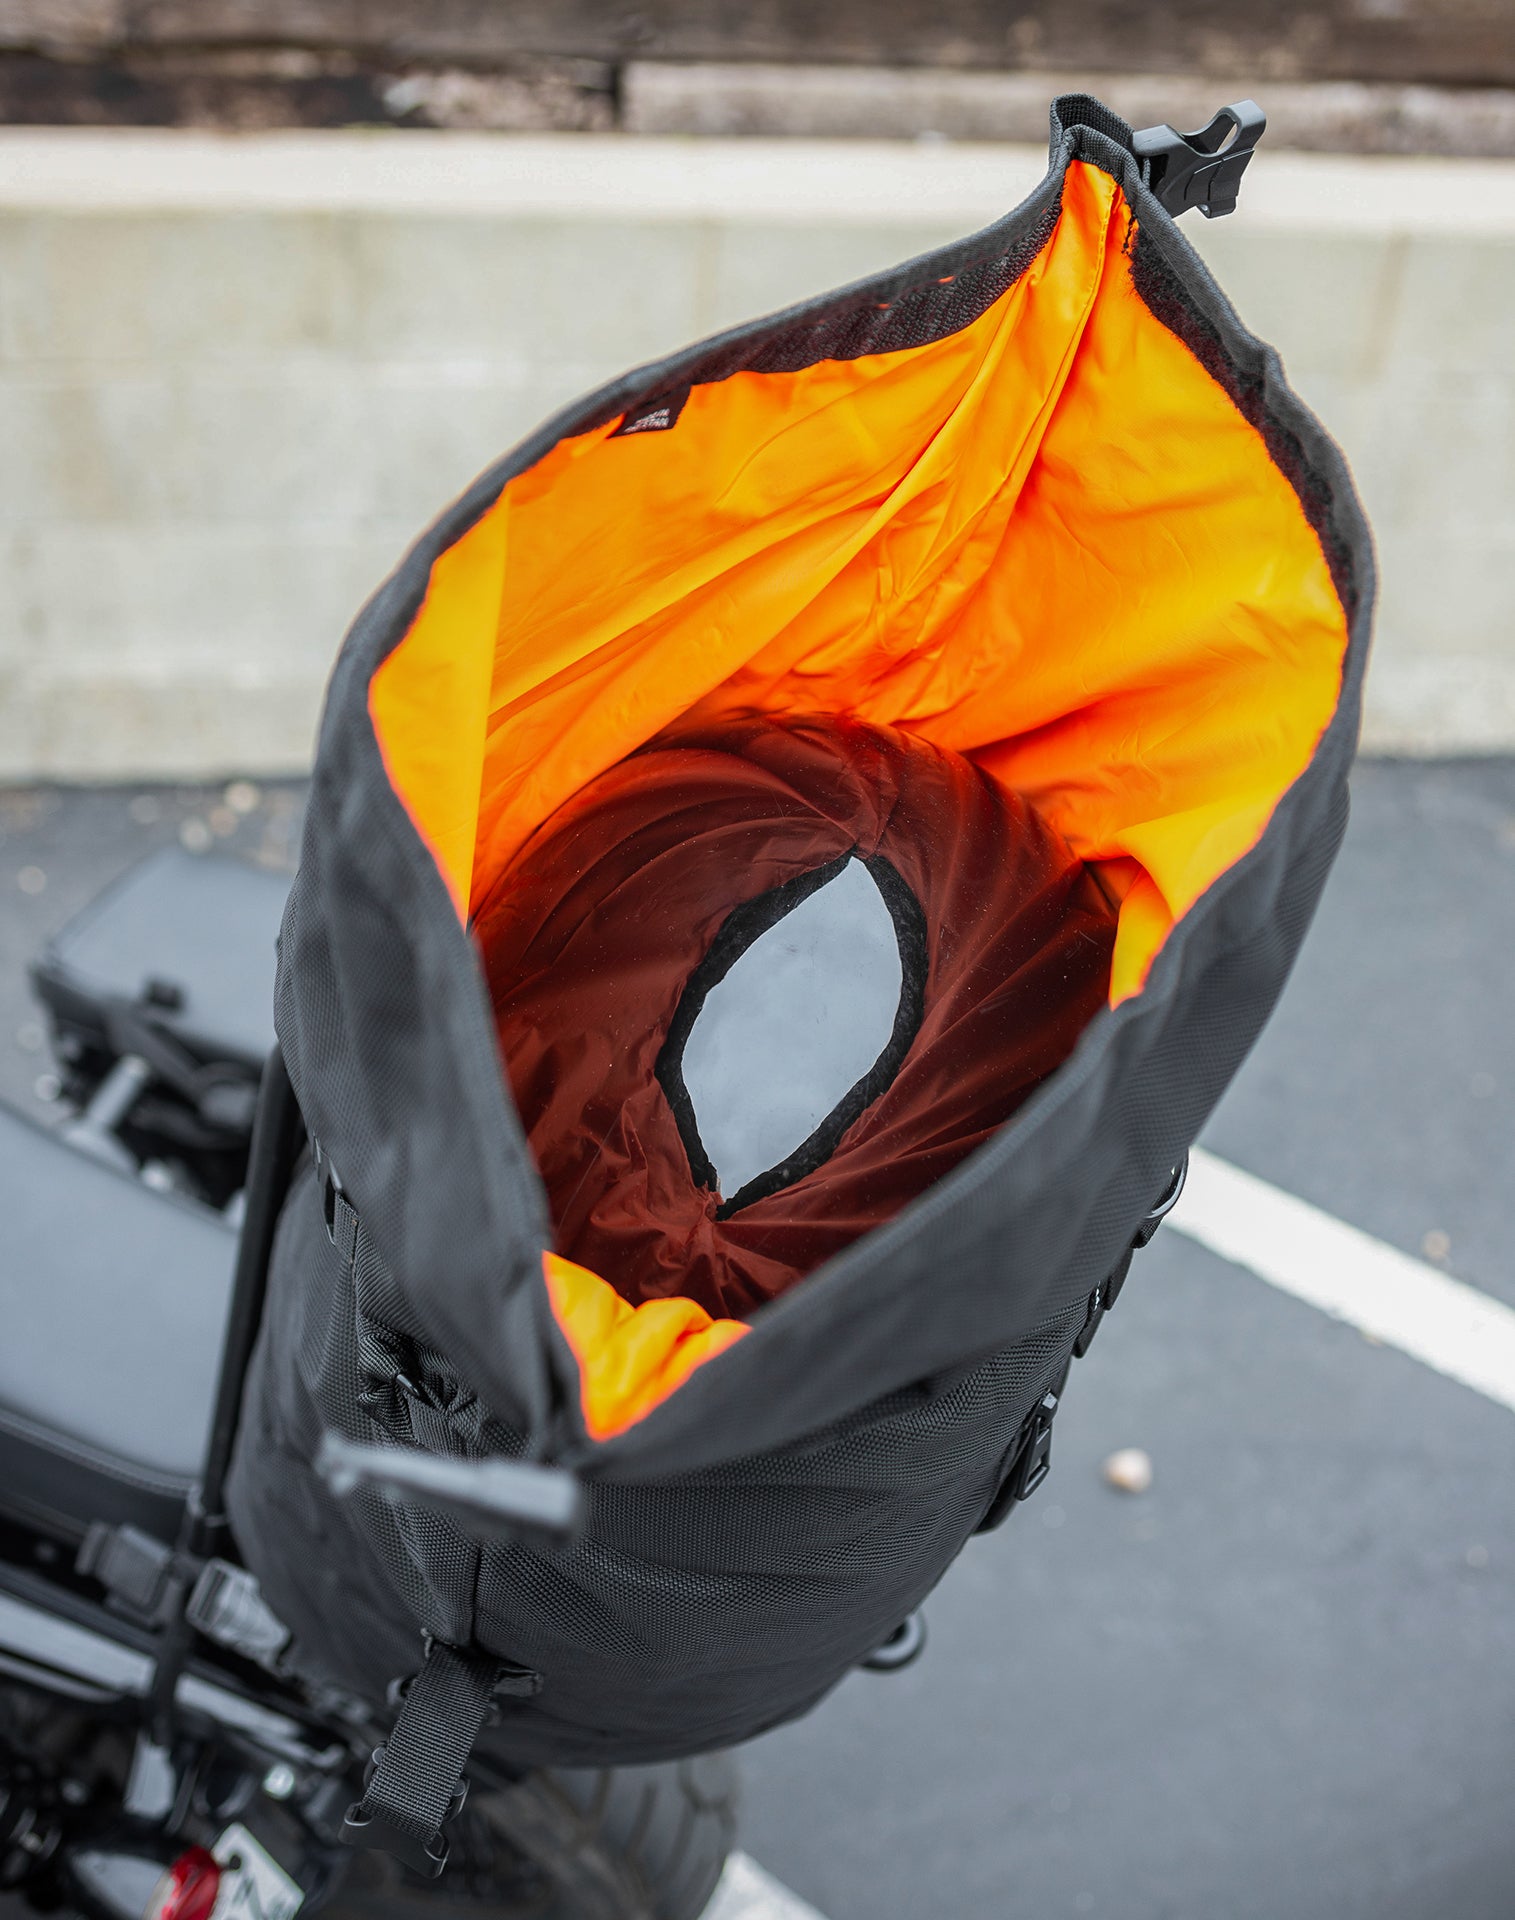 35L - Renegade XL Honda Motorcycle Dry Backpack